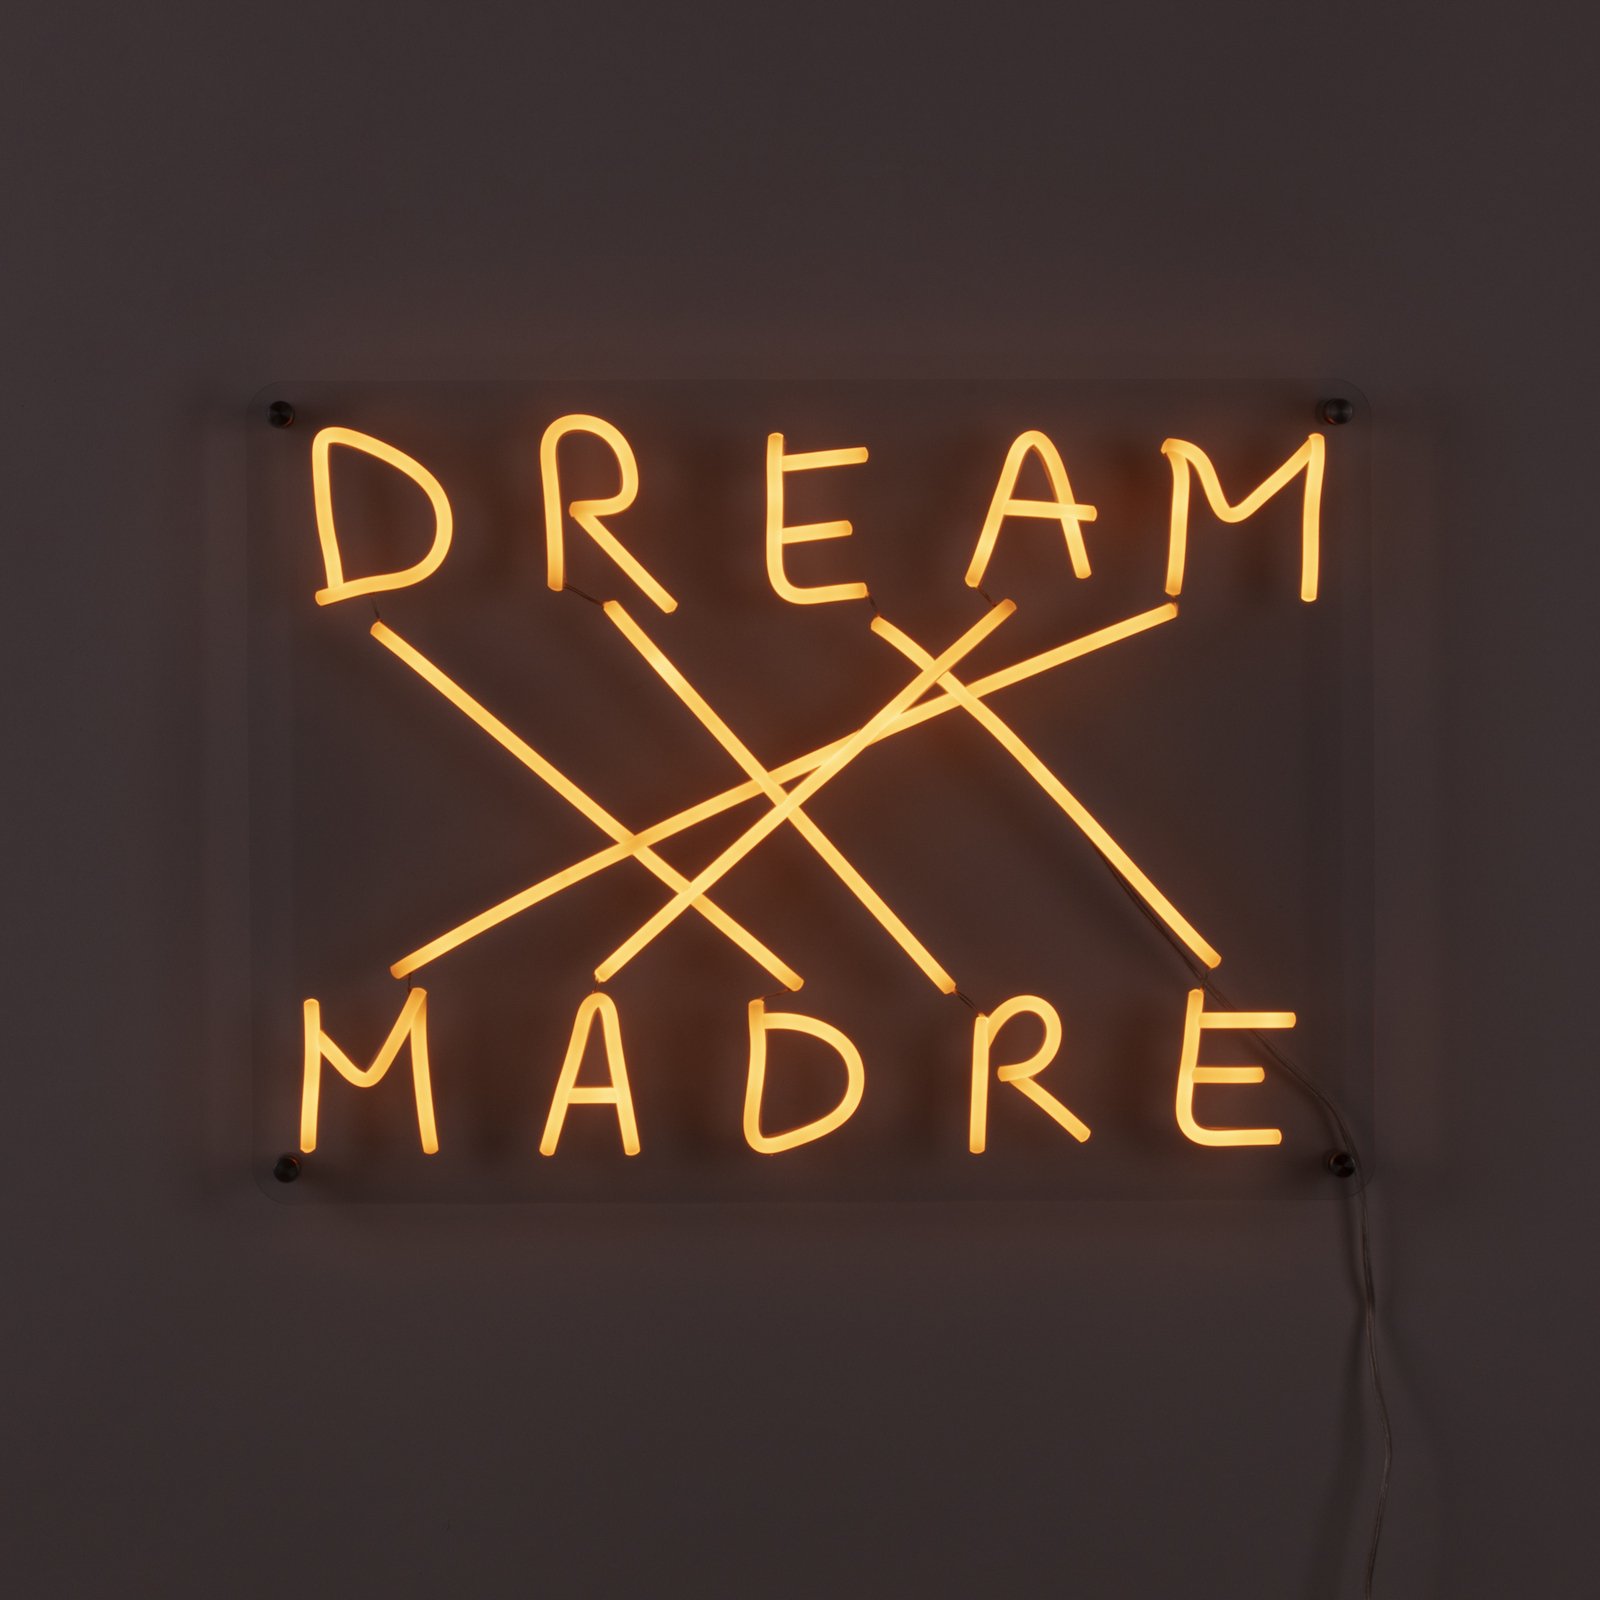 LED dekorvägglampa Dream-Madre, gul